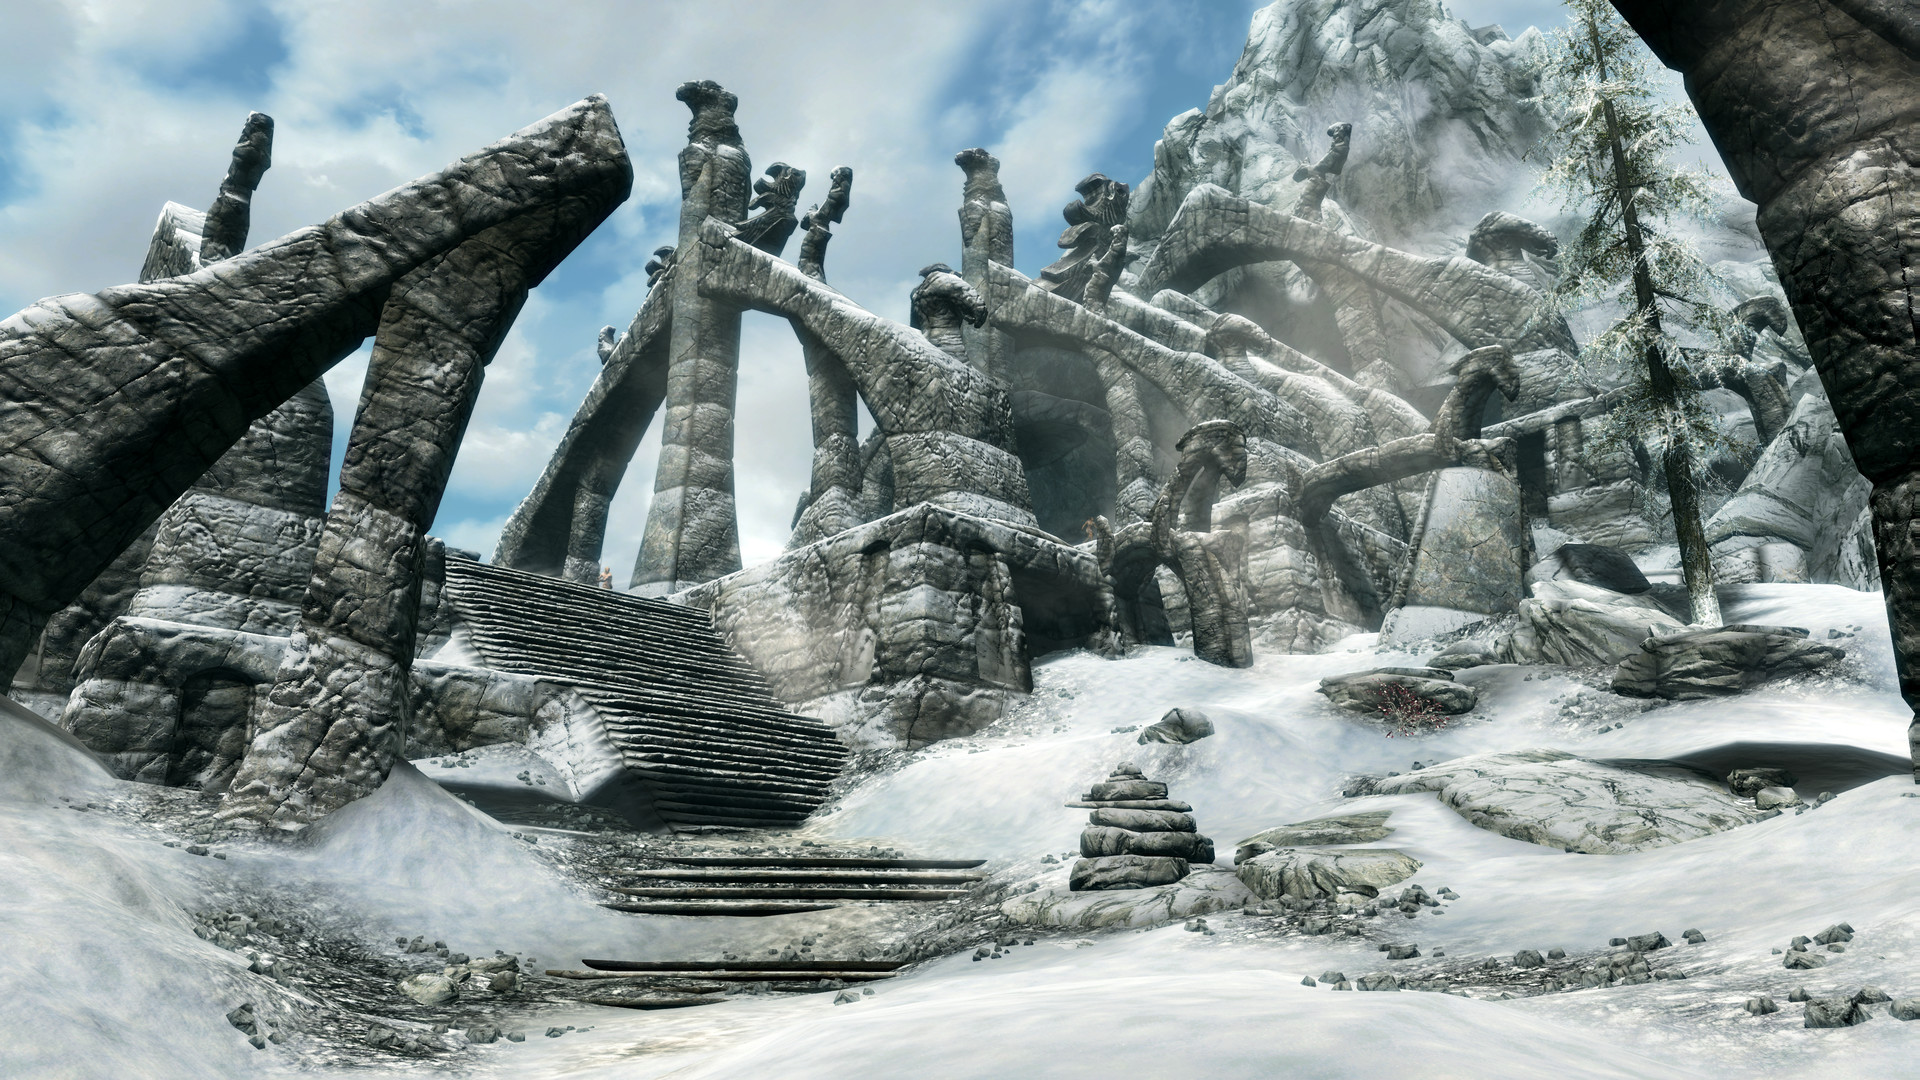 The Elder Scrolls V Skyrim winter settings snowy rock covered path